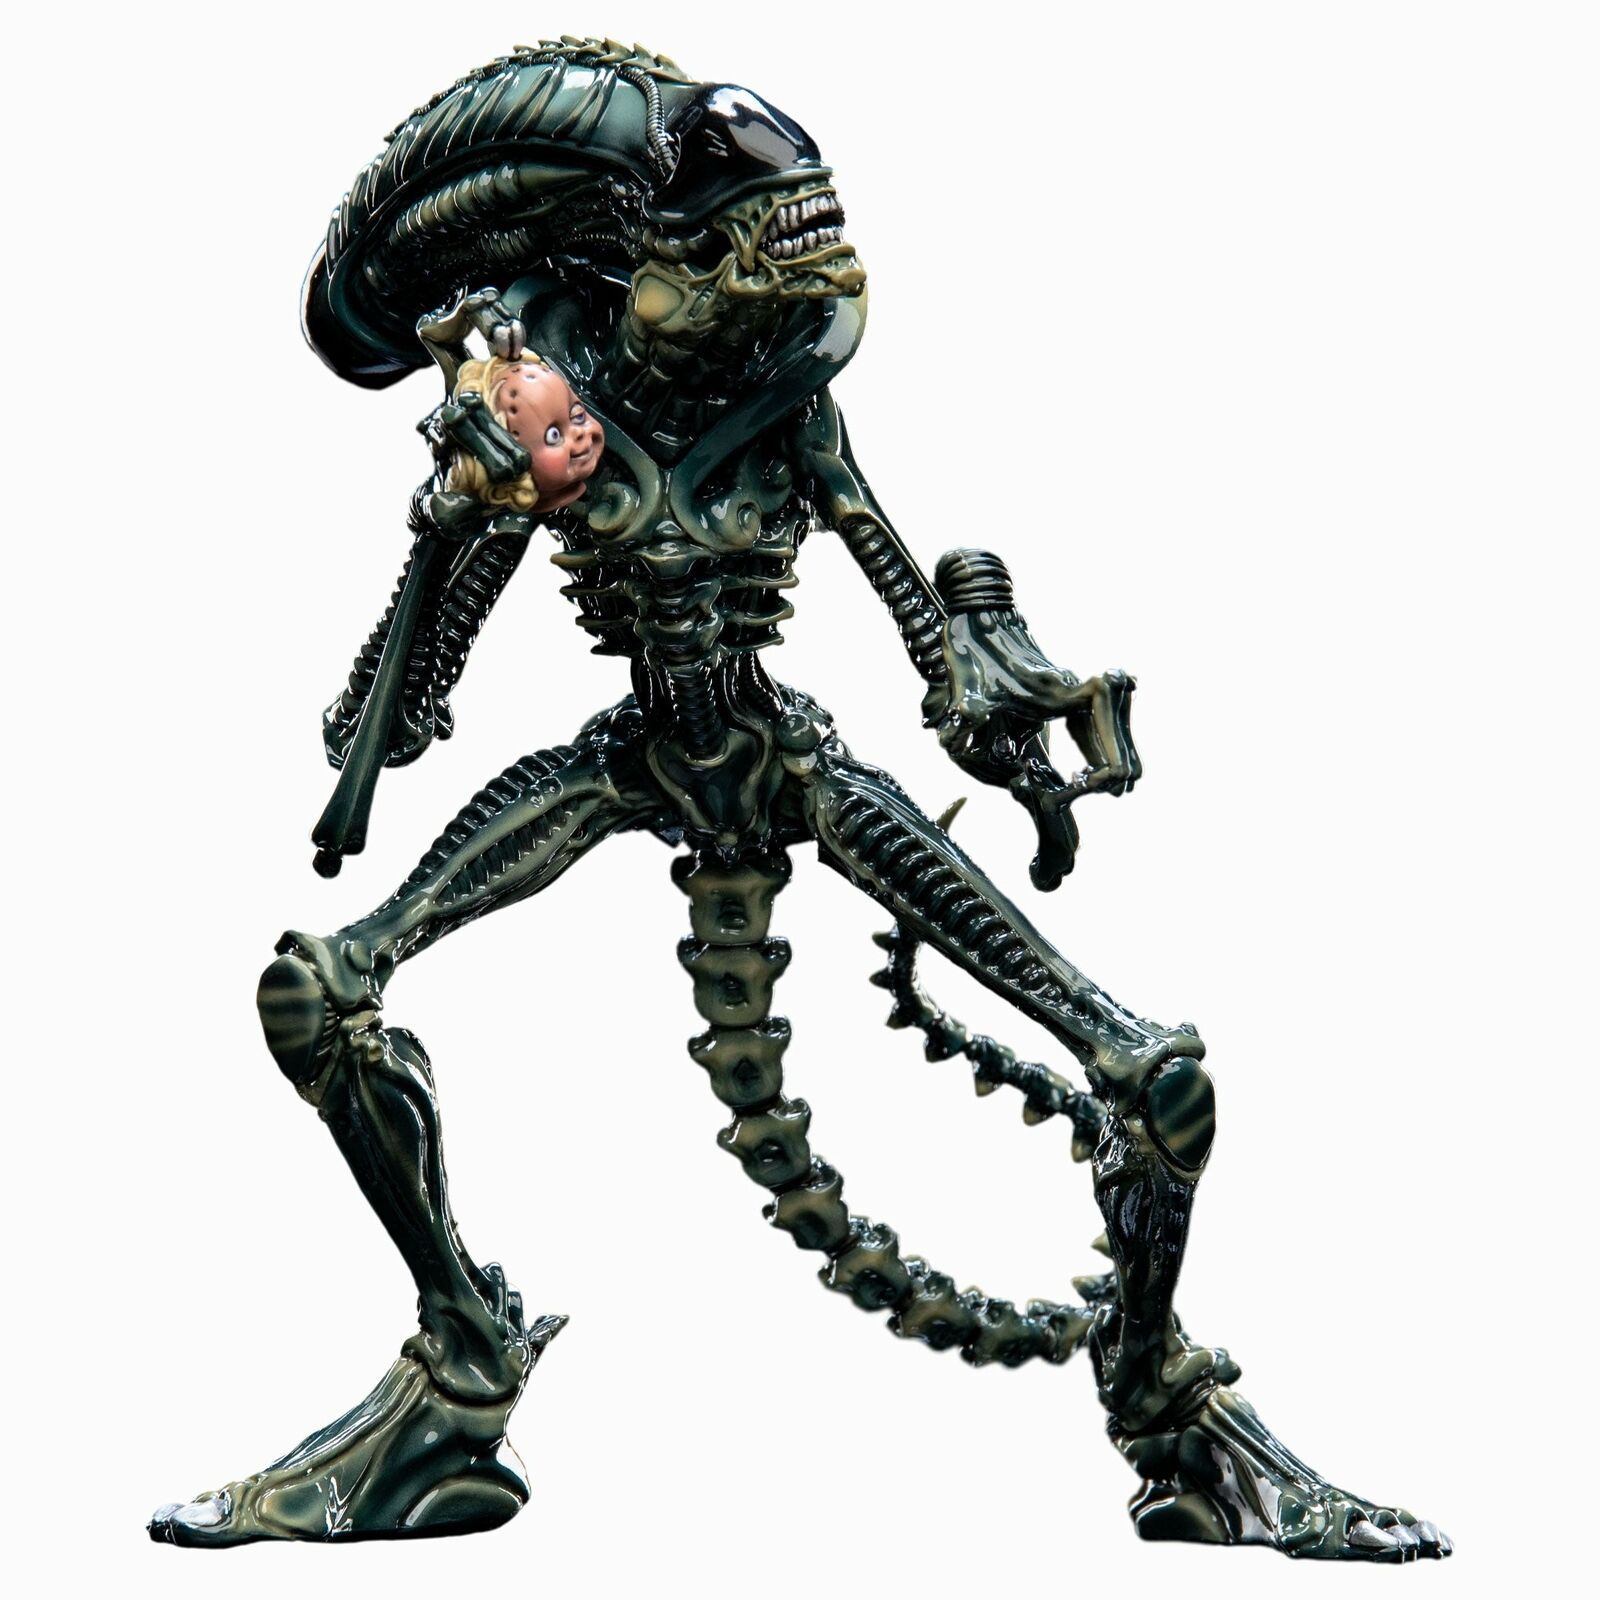 Weta Mini Epics Aliens Xenomorph Warrior Limited Edition Figure: Damaged Package